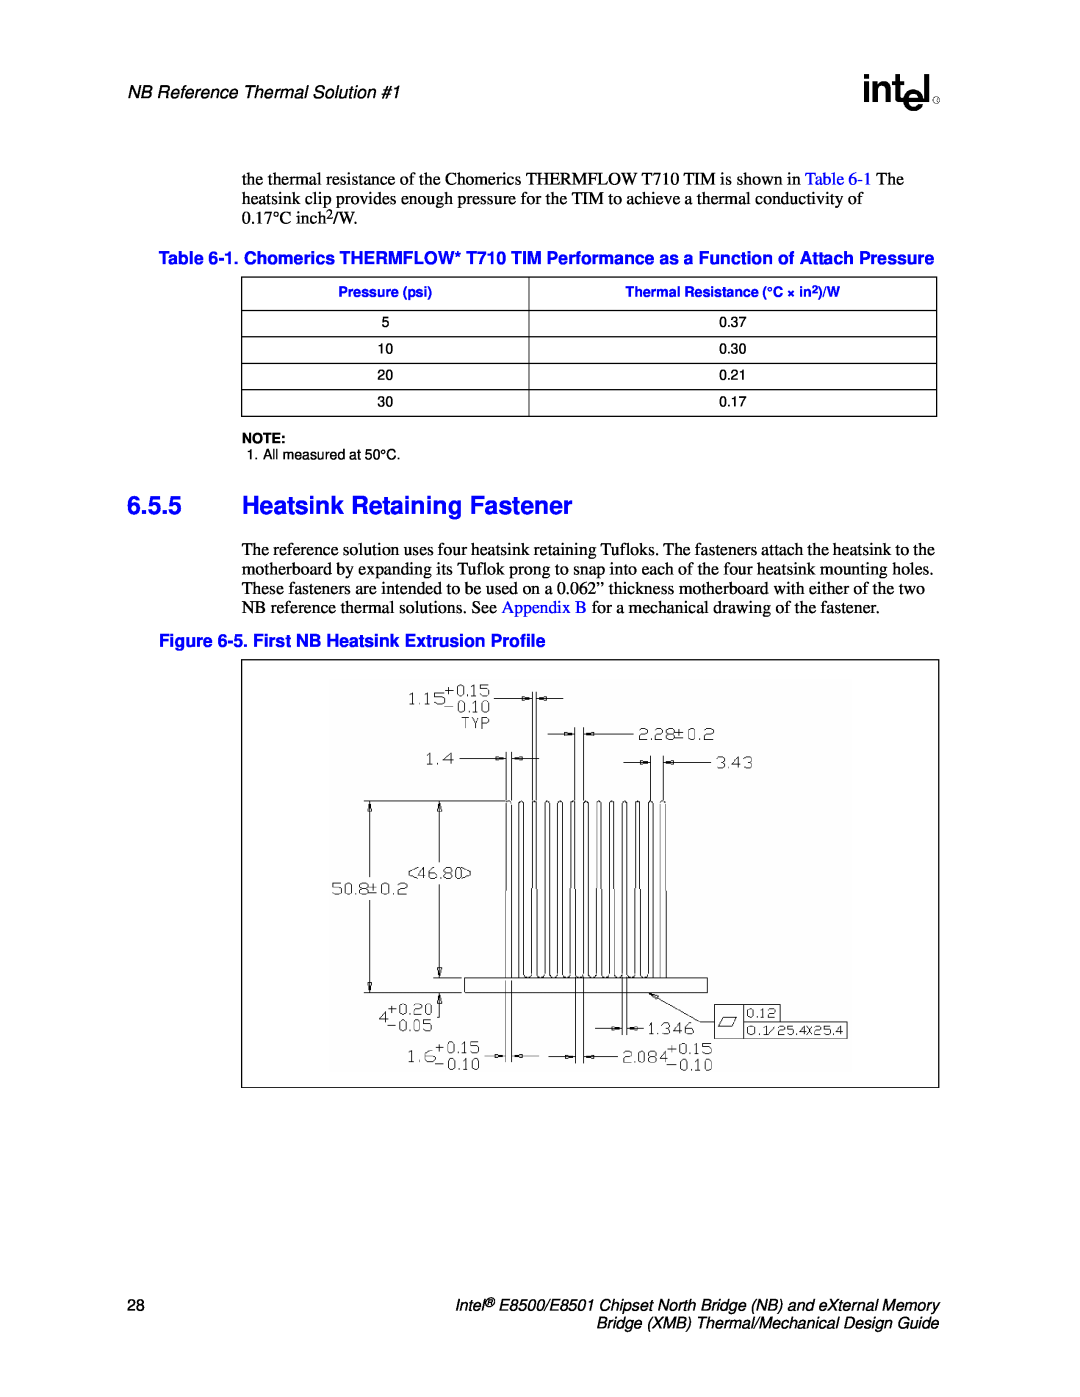 Intel E8501 6.5.5Heatsink Retaining Fastener, NB Reference Thermal Solution #1, 5.First NB Heatsink Extrusion Profile 